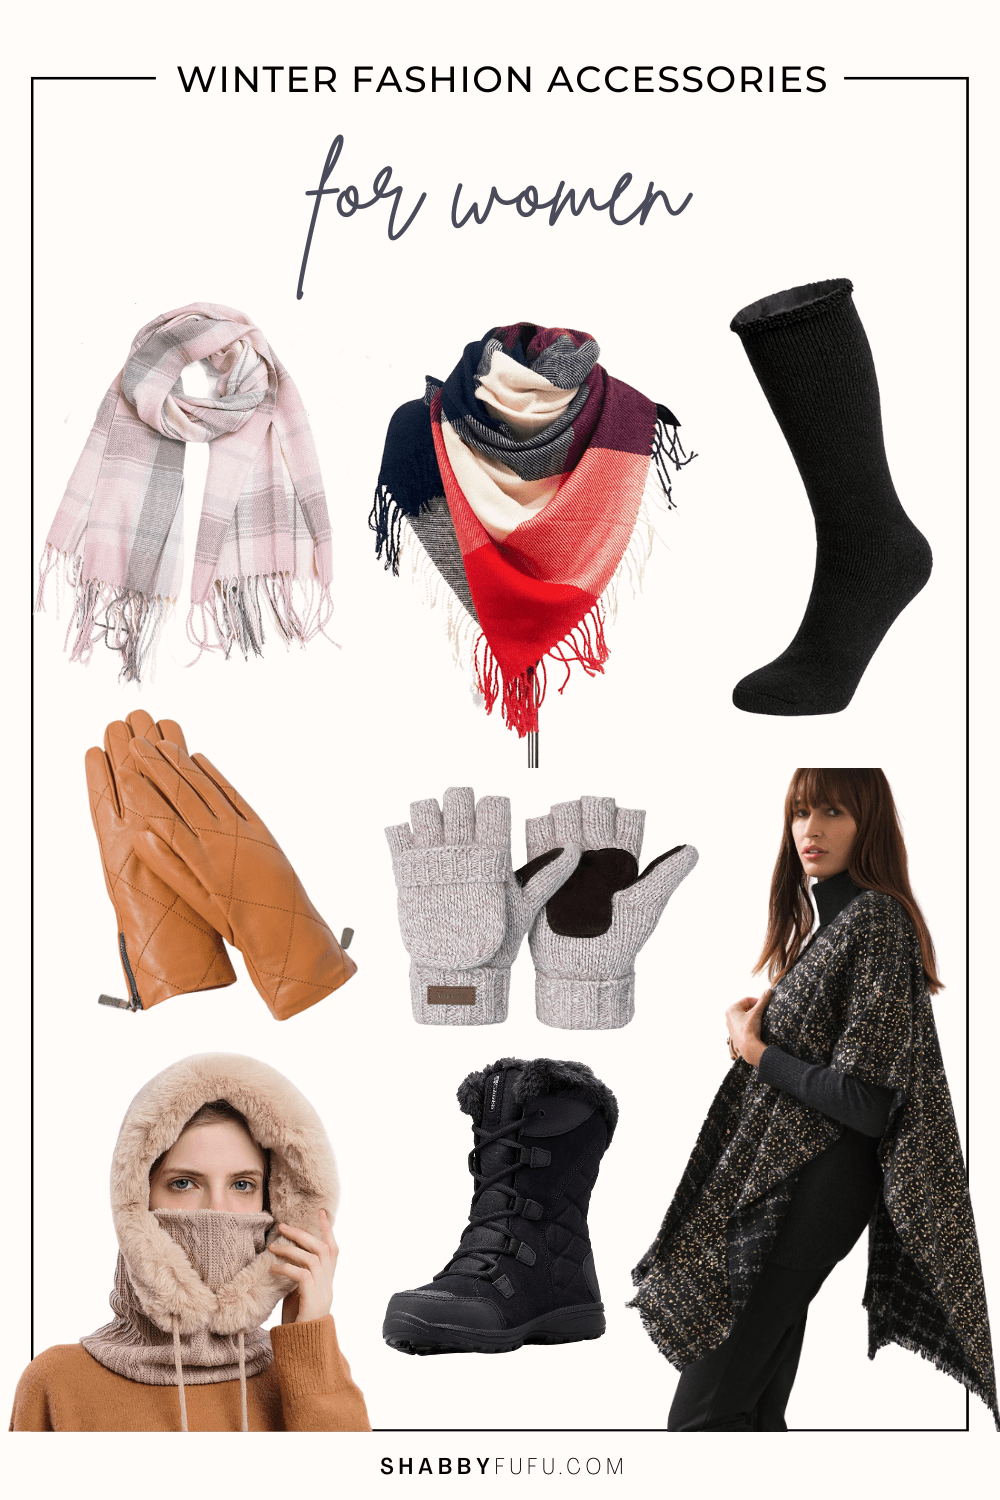 New! Stylish Winter Fashion Accessories For Women